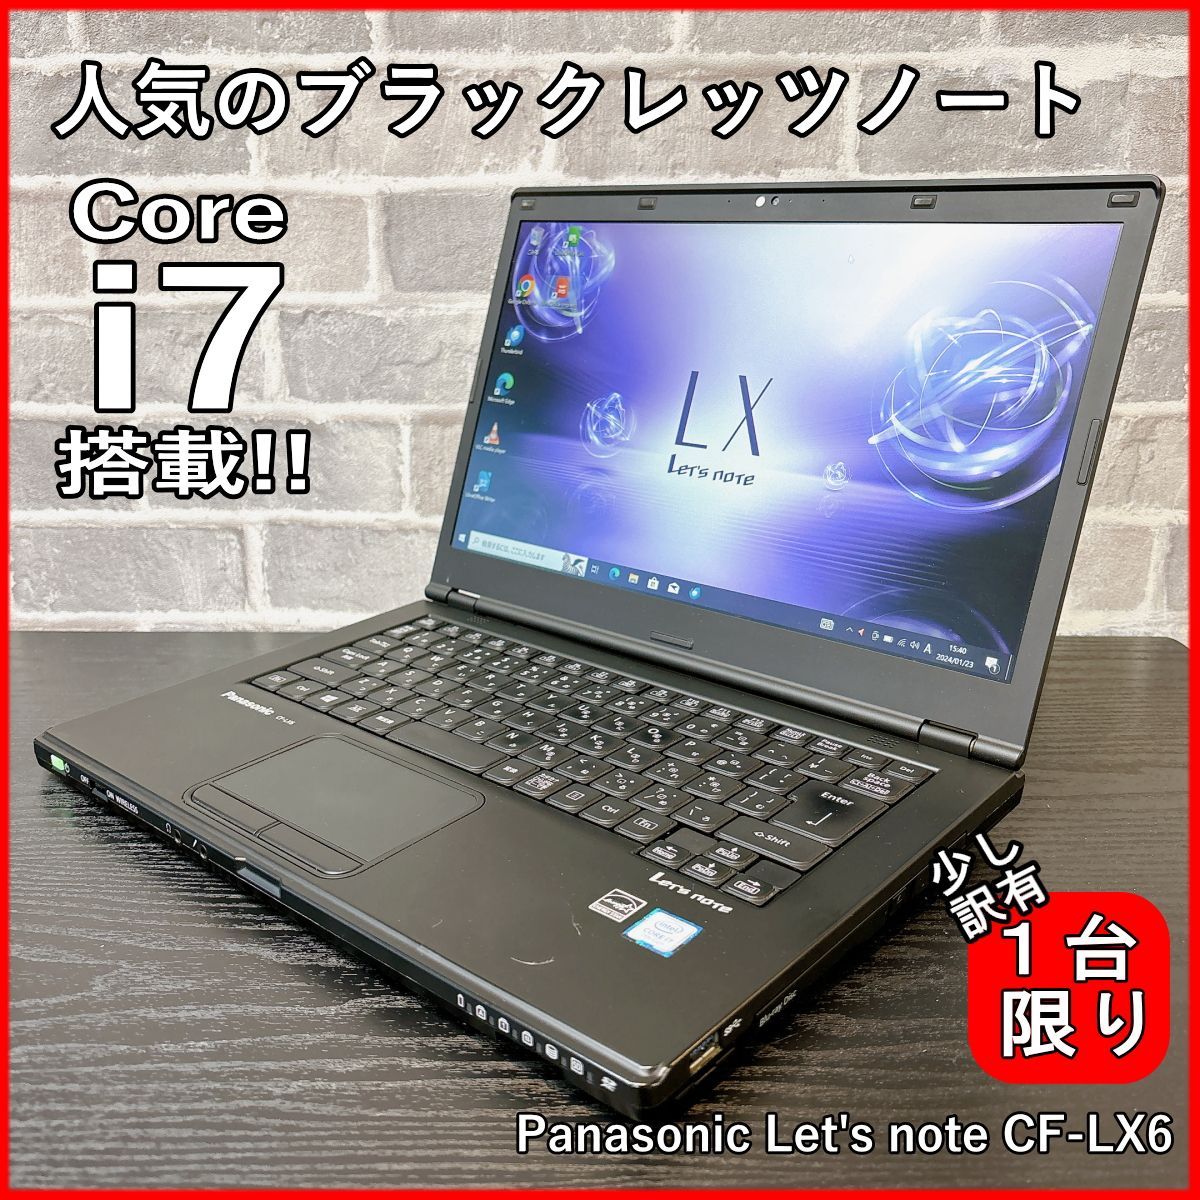 Panasonic Let's note CF-LX6FDQPP Core i7 7500U 2.7GHz メモリ16GB ...